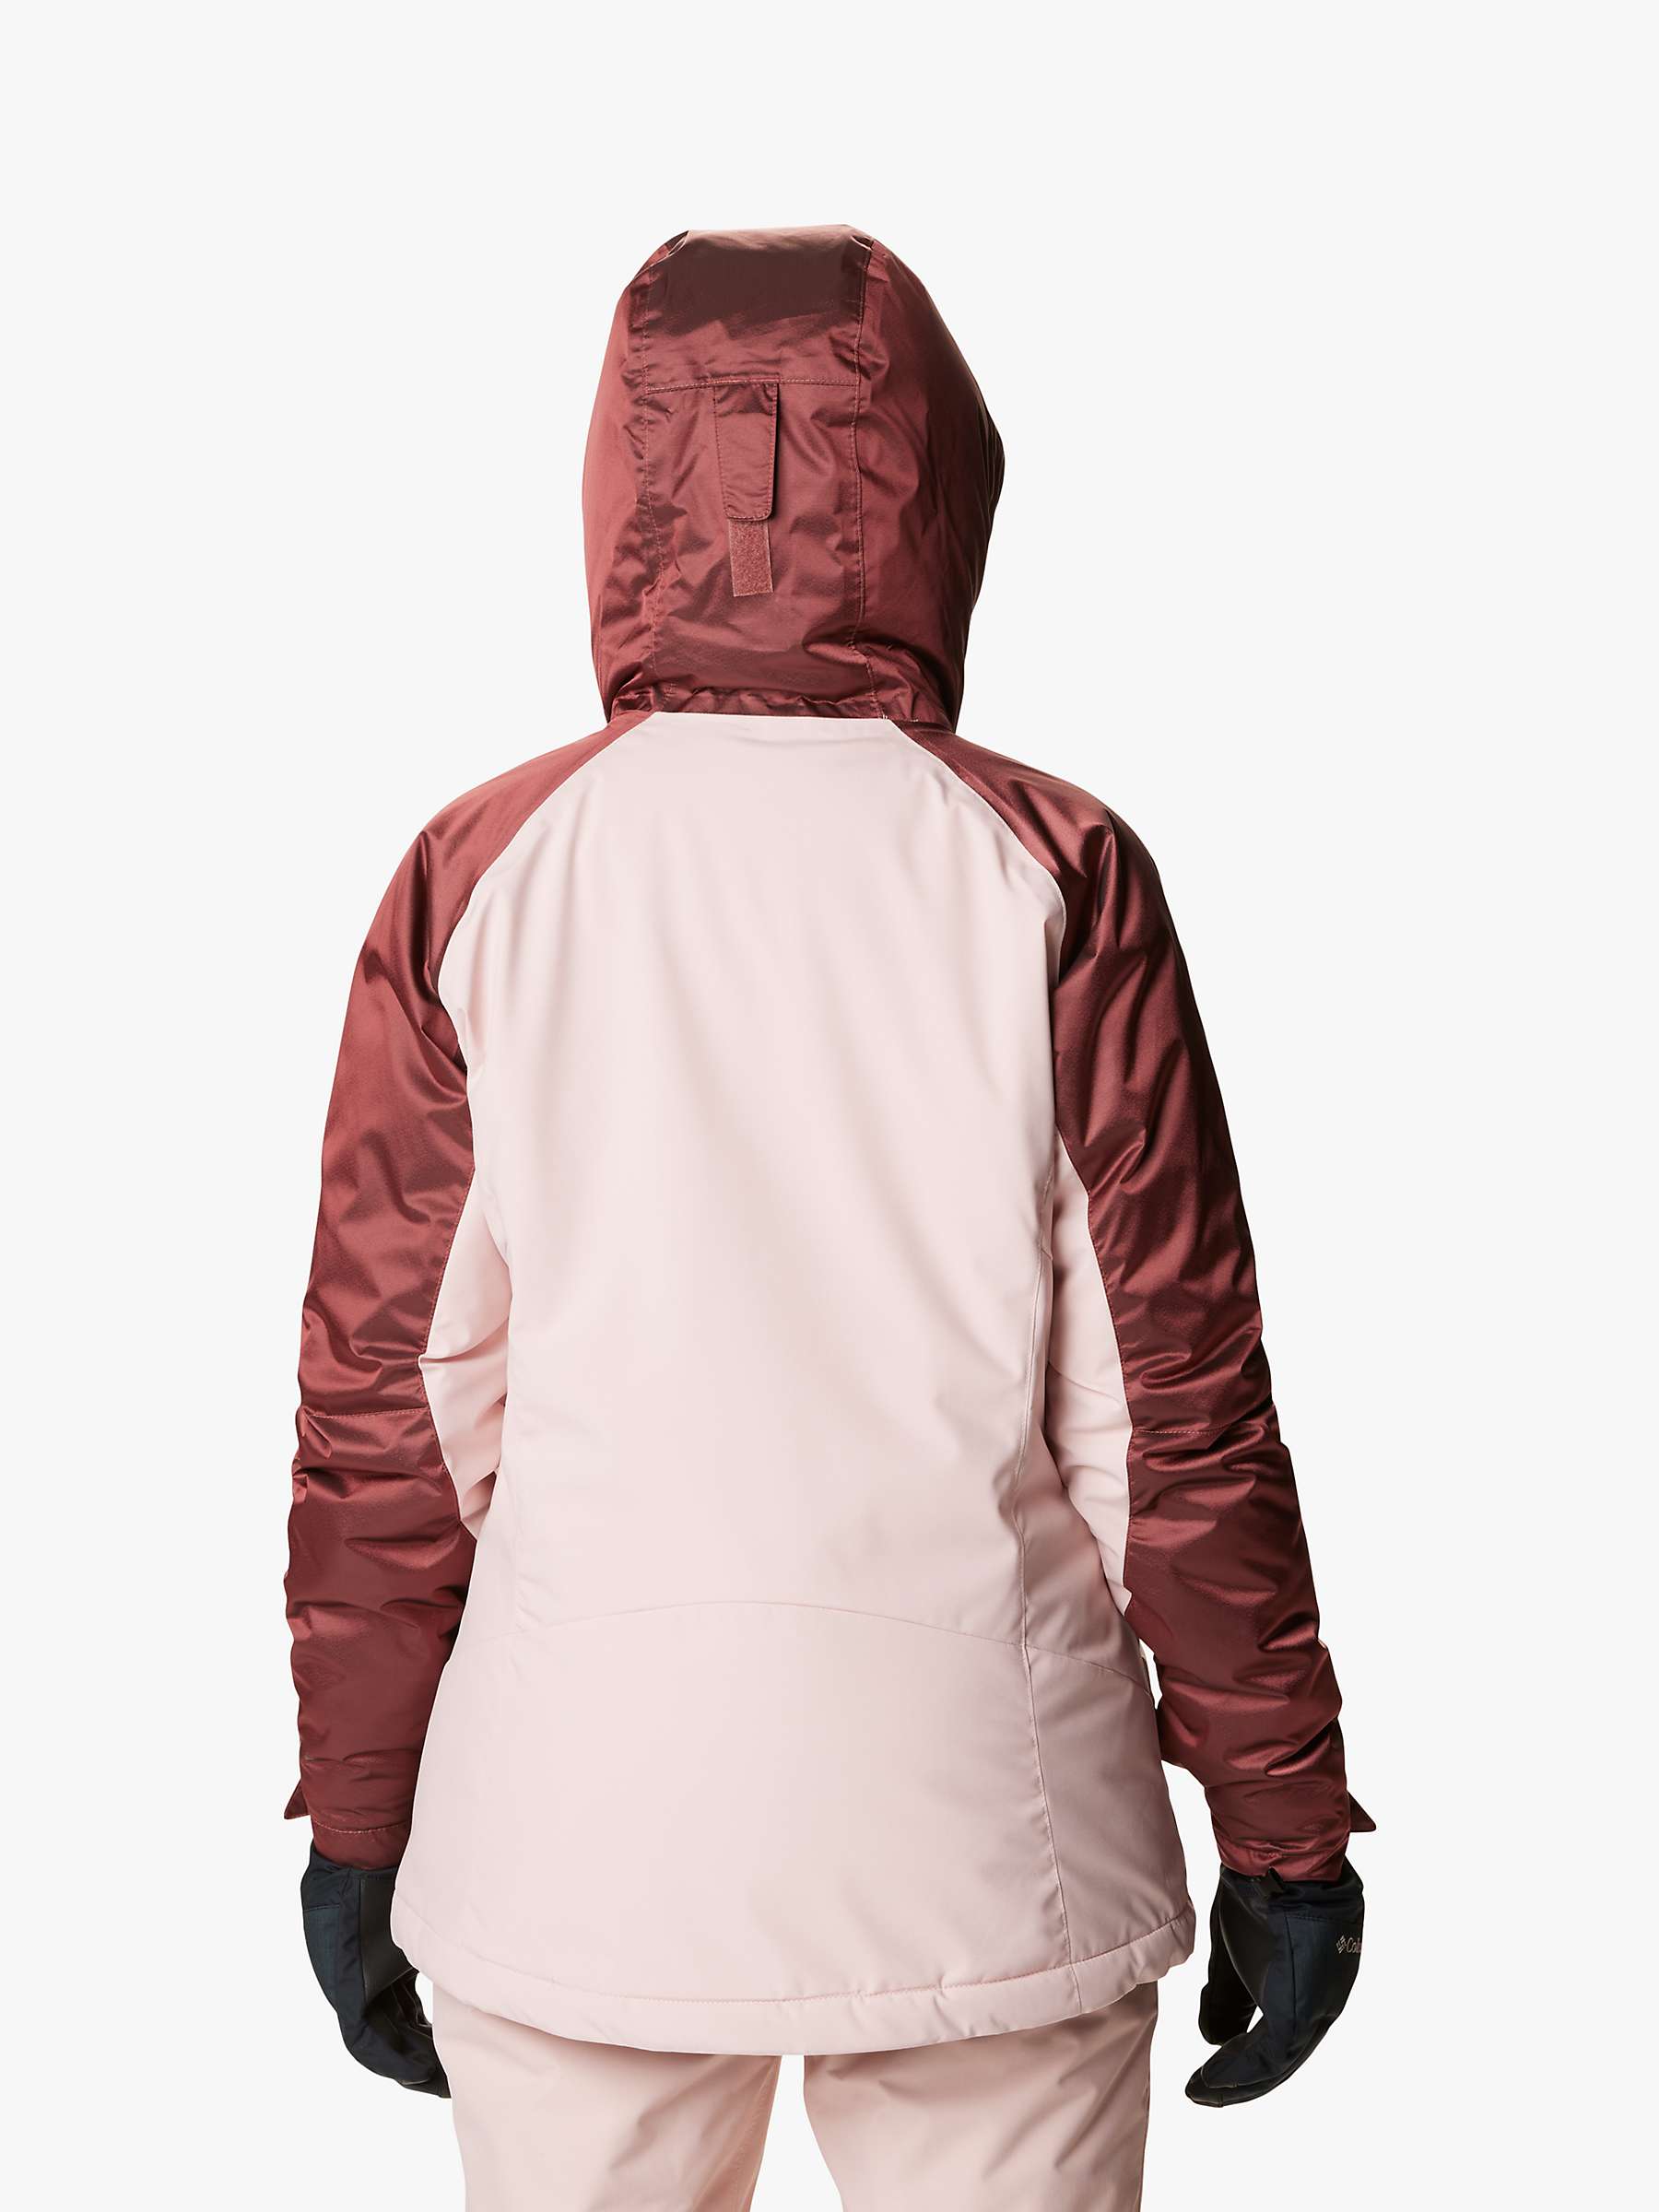 Buy Columbia Women's Sweet Shredder™ II Waterproof Insulated Ski Jacket Online at johnlewis.com